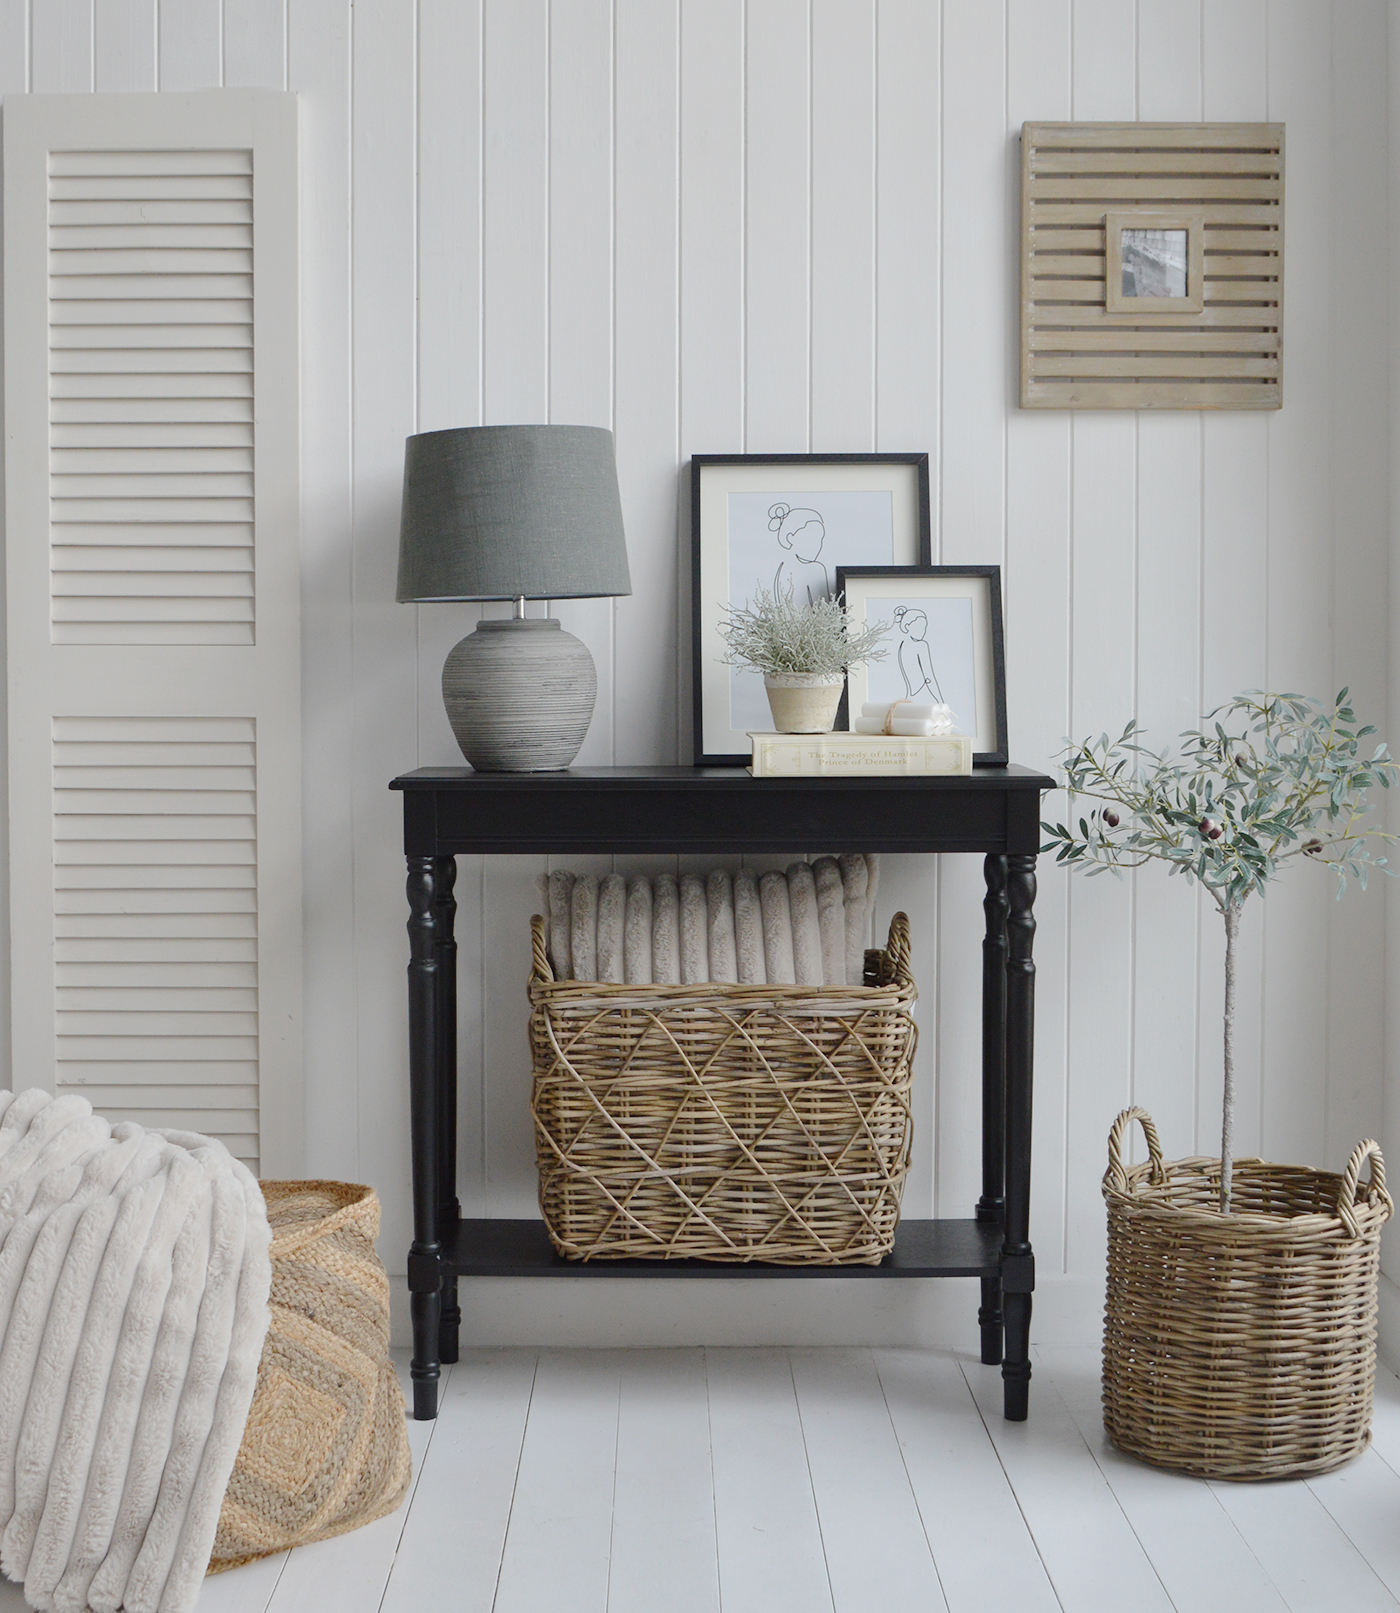 Ashby black console hall table with a shelf for an elegant Hamptons Beach House interior